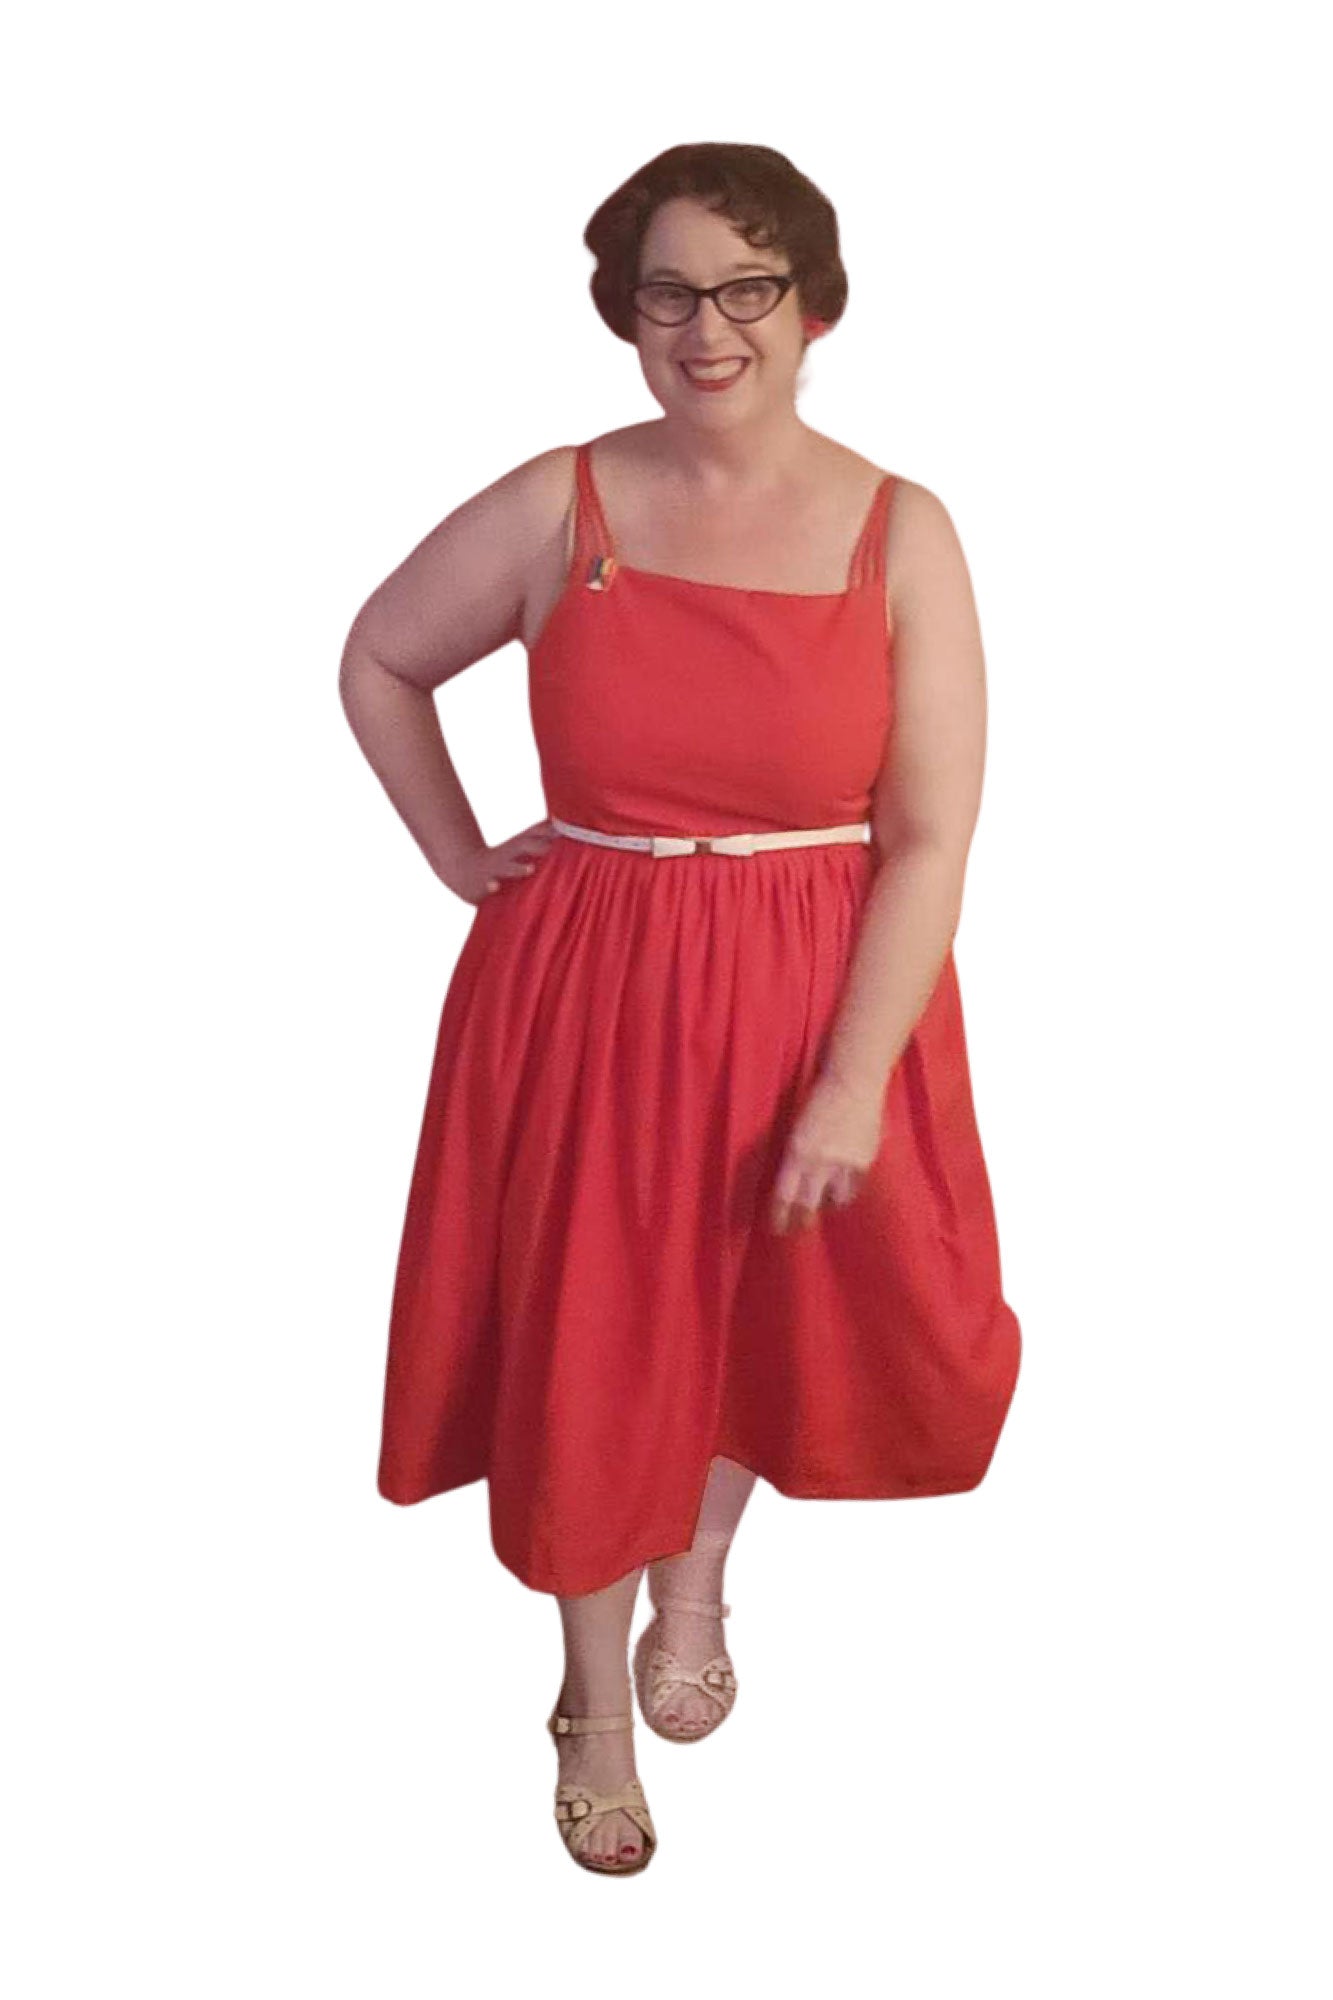 Tammy Circle Dress in Petite